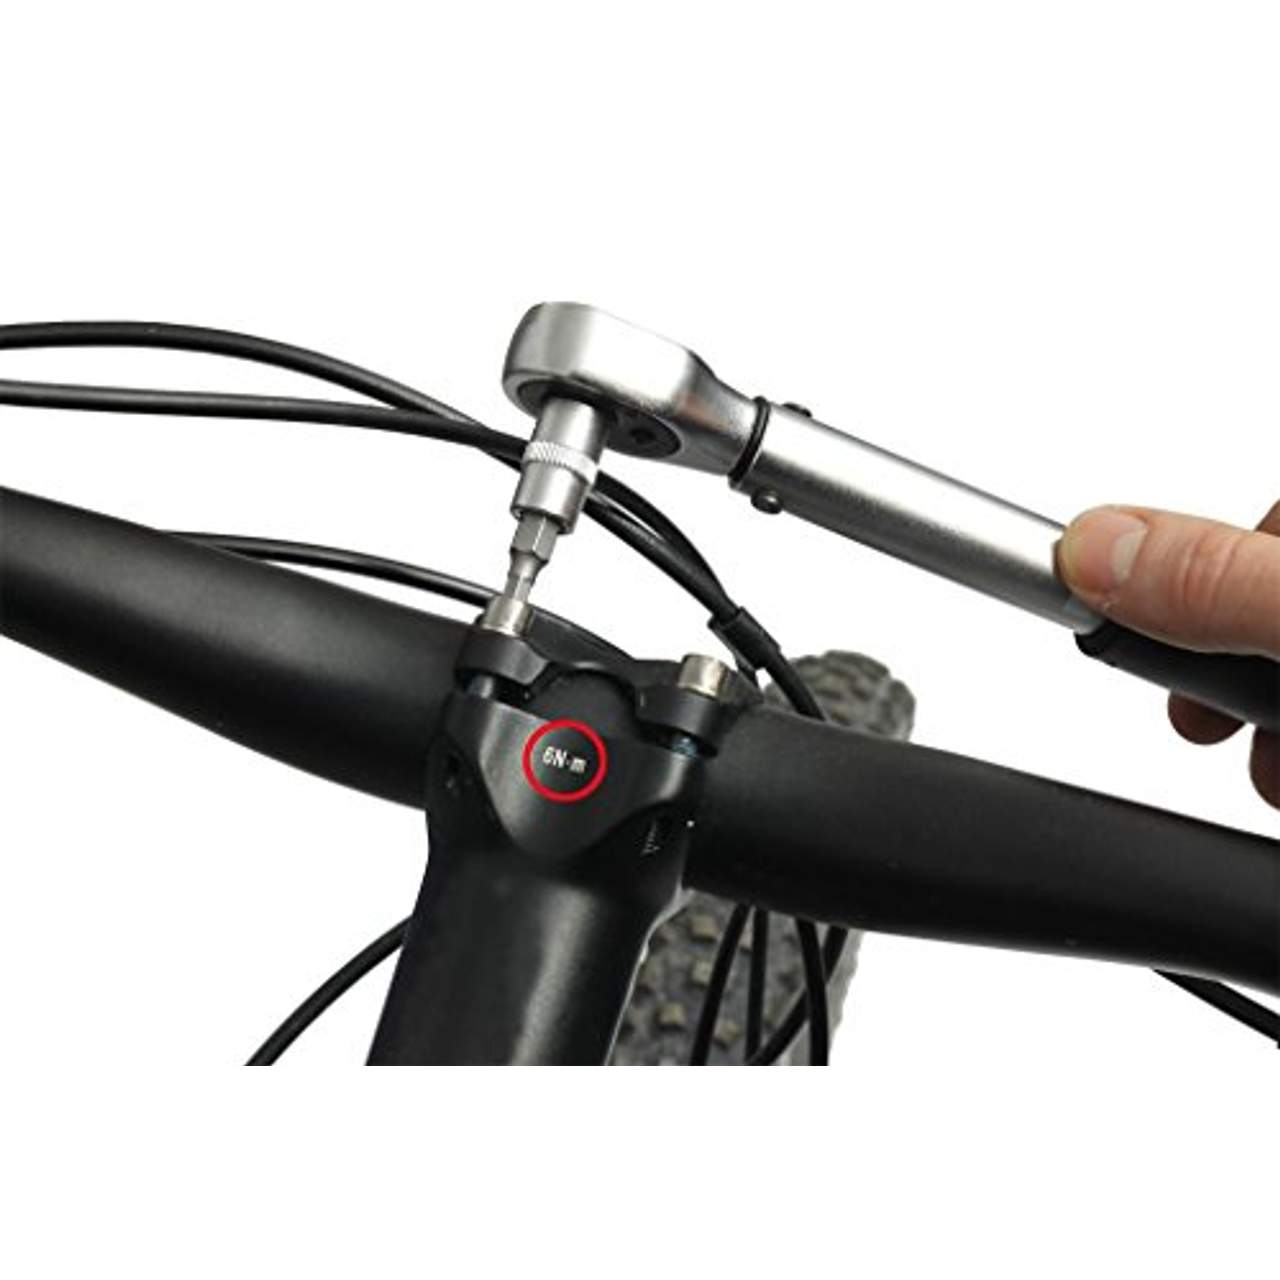 Normex Fahrrad-Drehmomentschlüssel-Satz 2-14 Nm